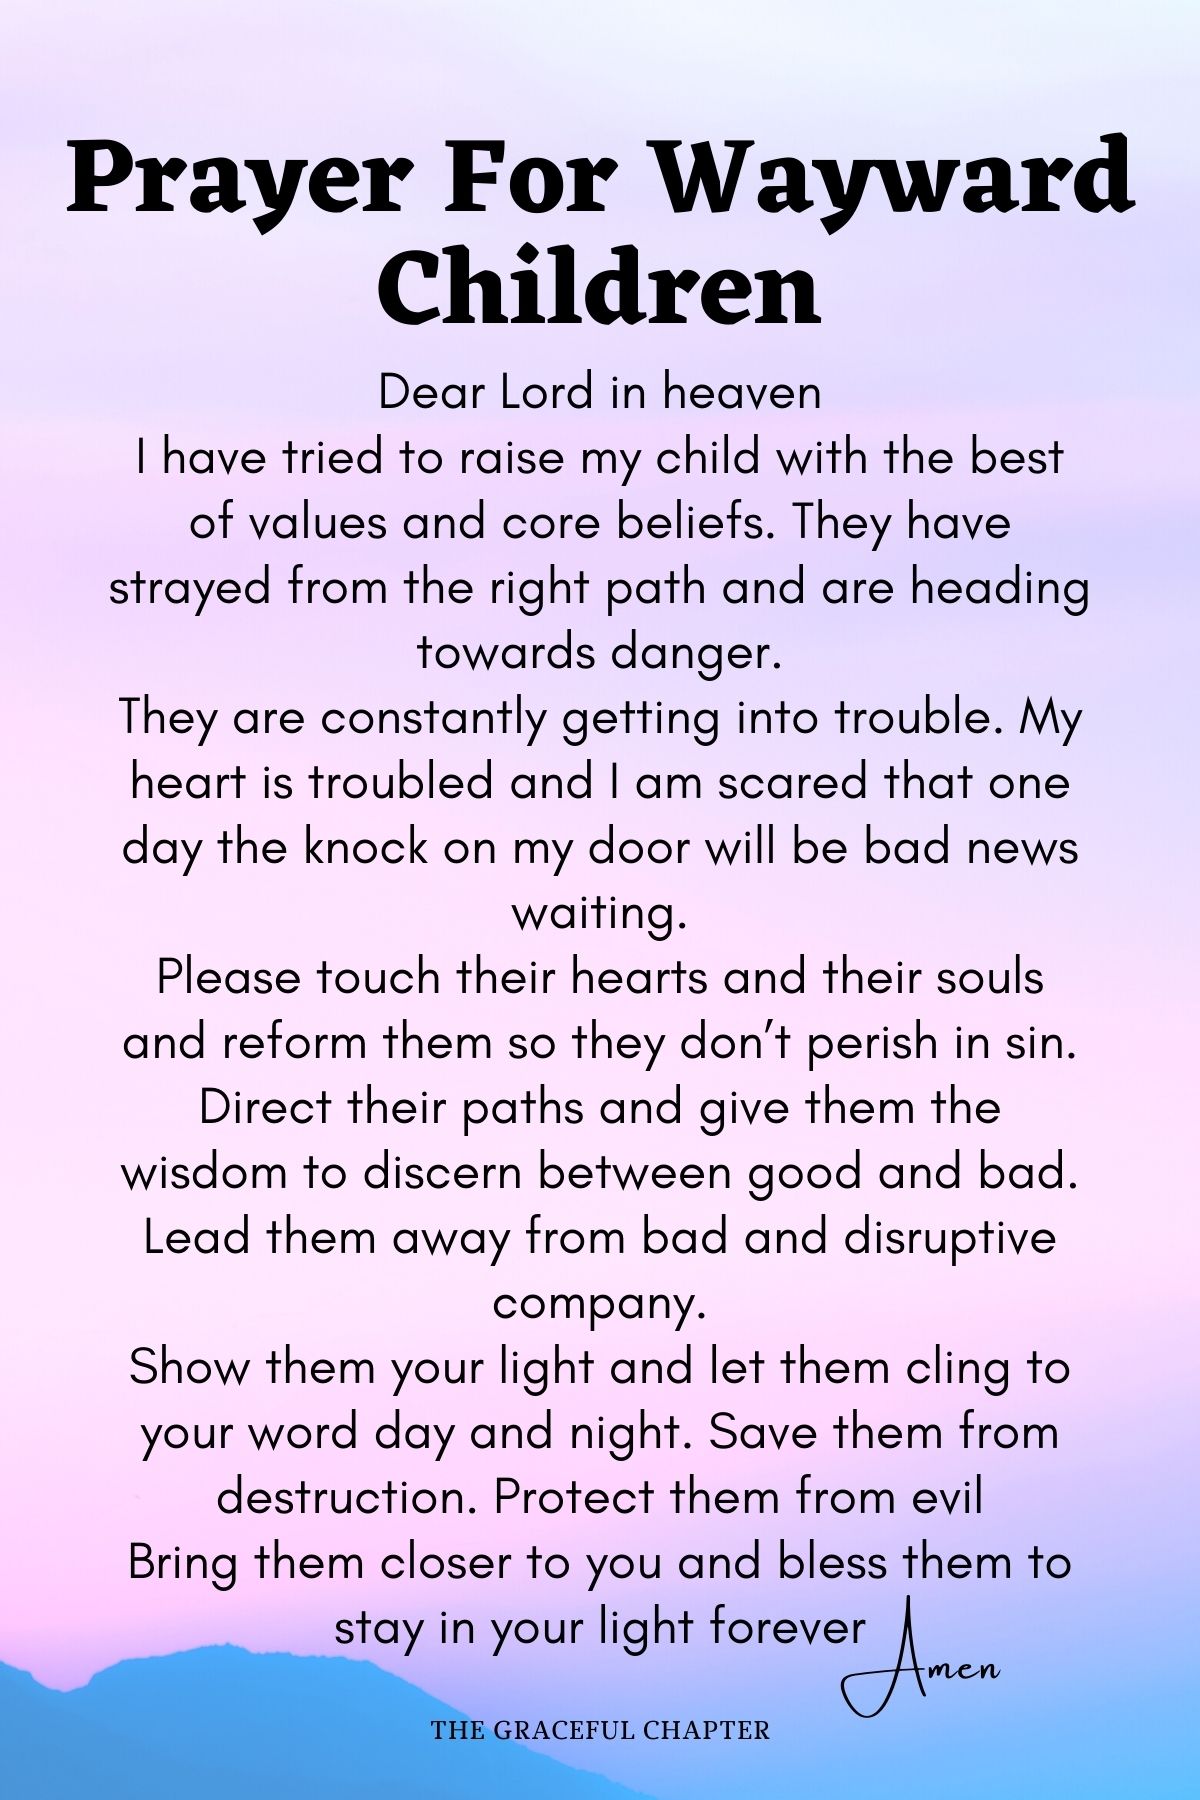 Prayer for wayward children